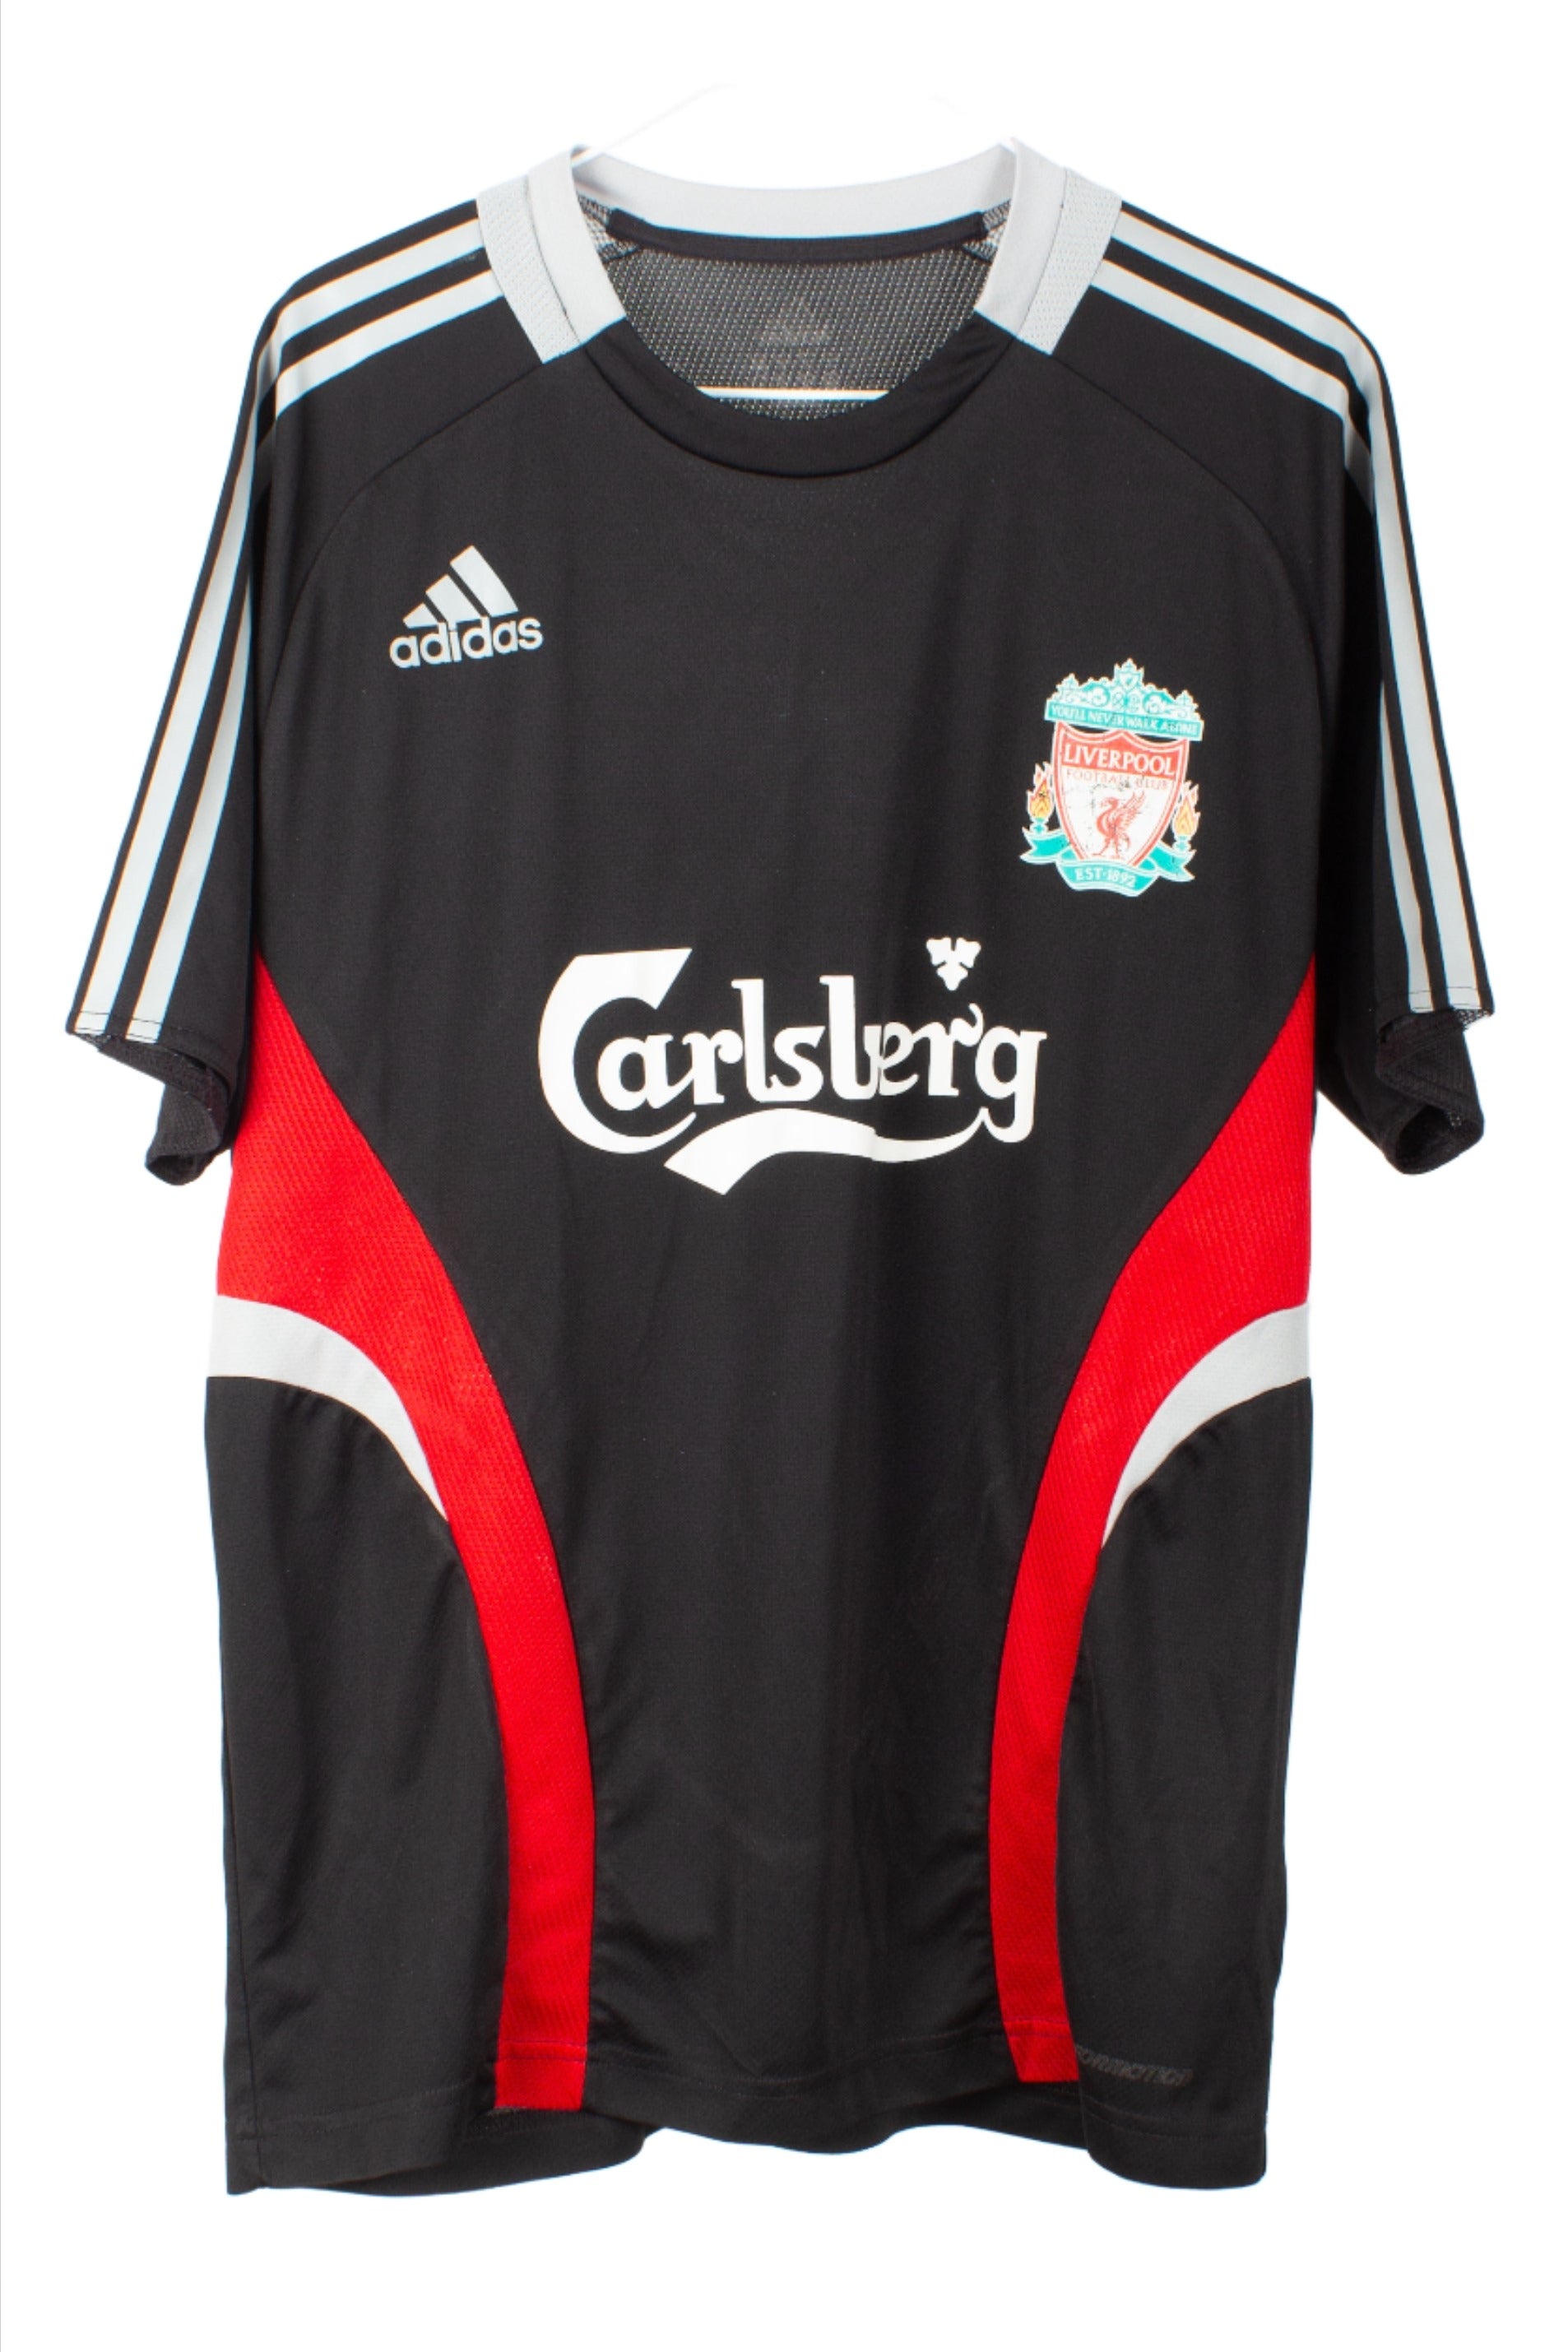 Liverpool 2008 *Player Spec* Training Shirt (S)